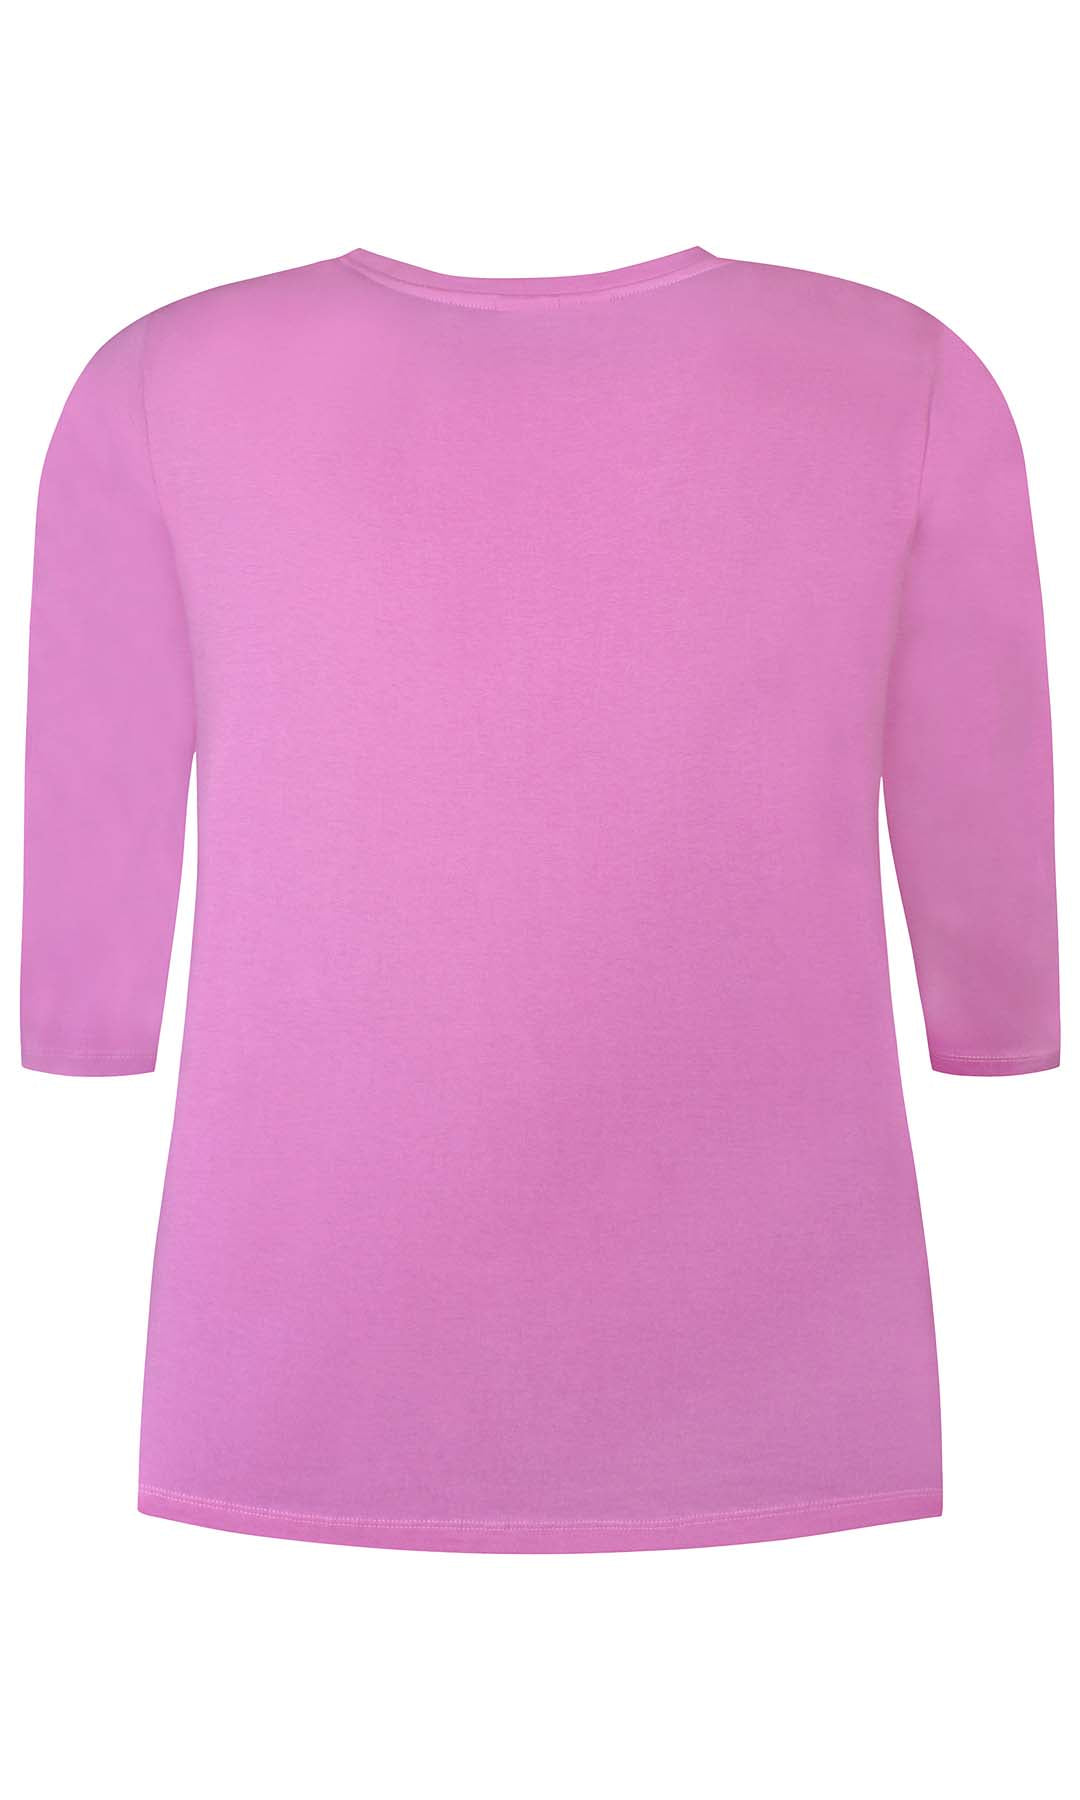 Alberta 094 - T-shirt - Pink